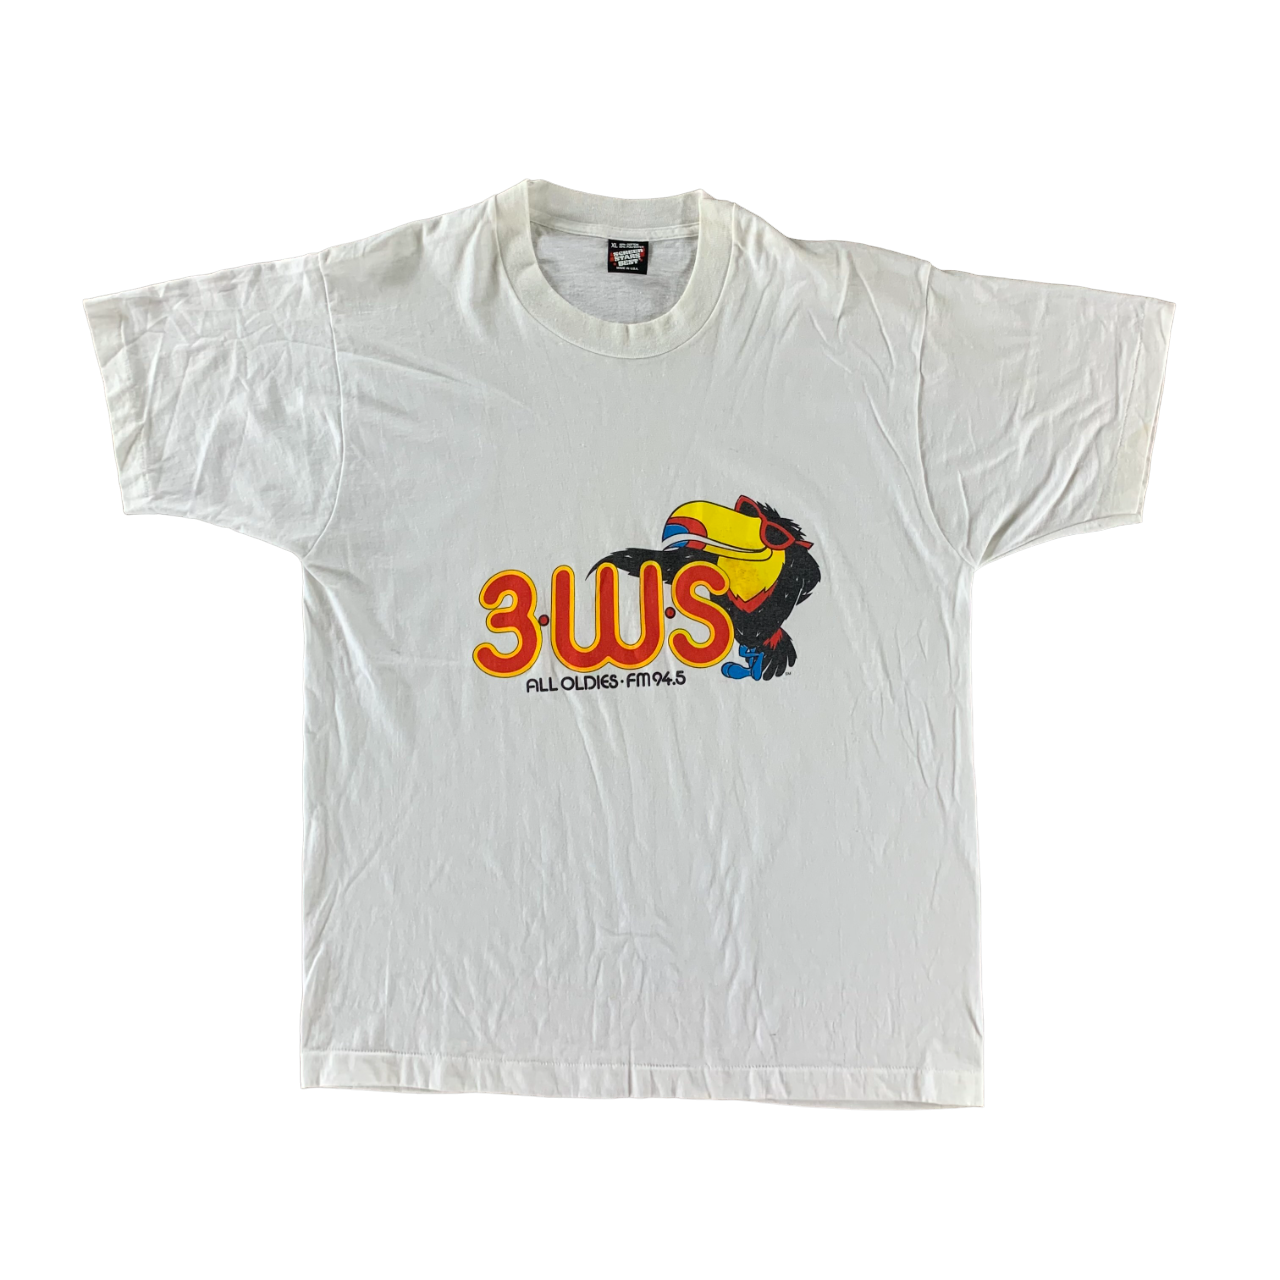 Vintage 1990s FM Radio T-shirt size XL